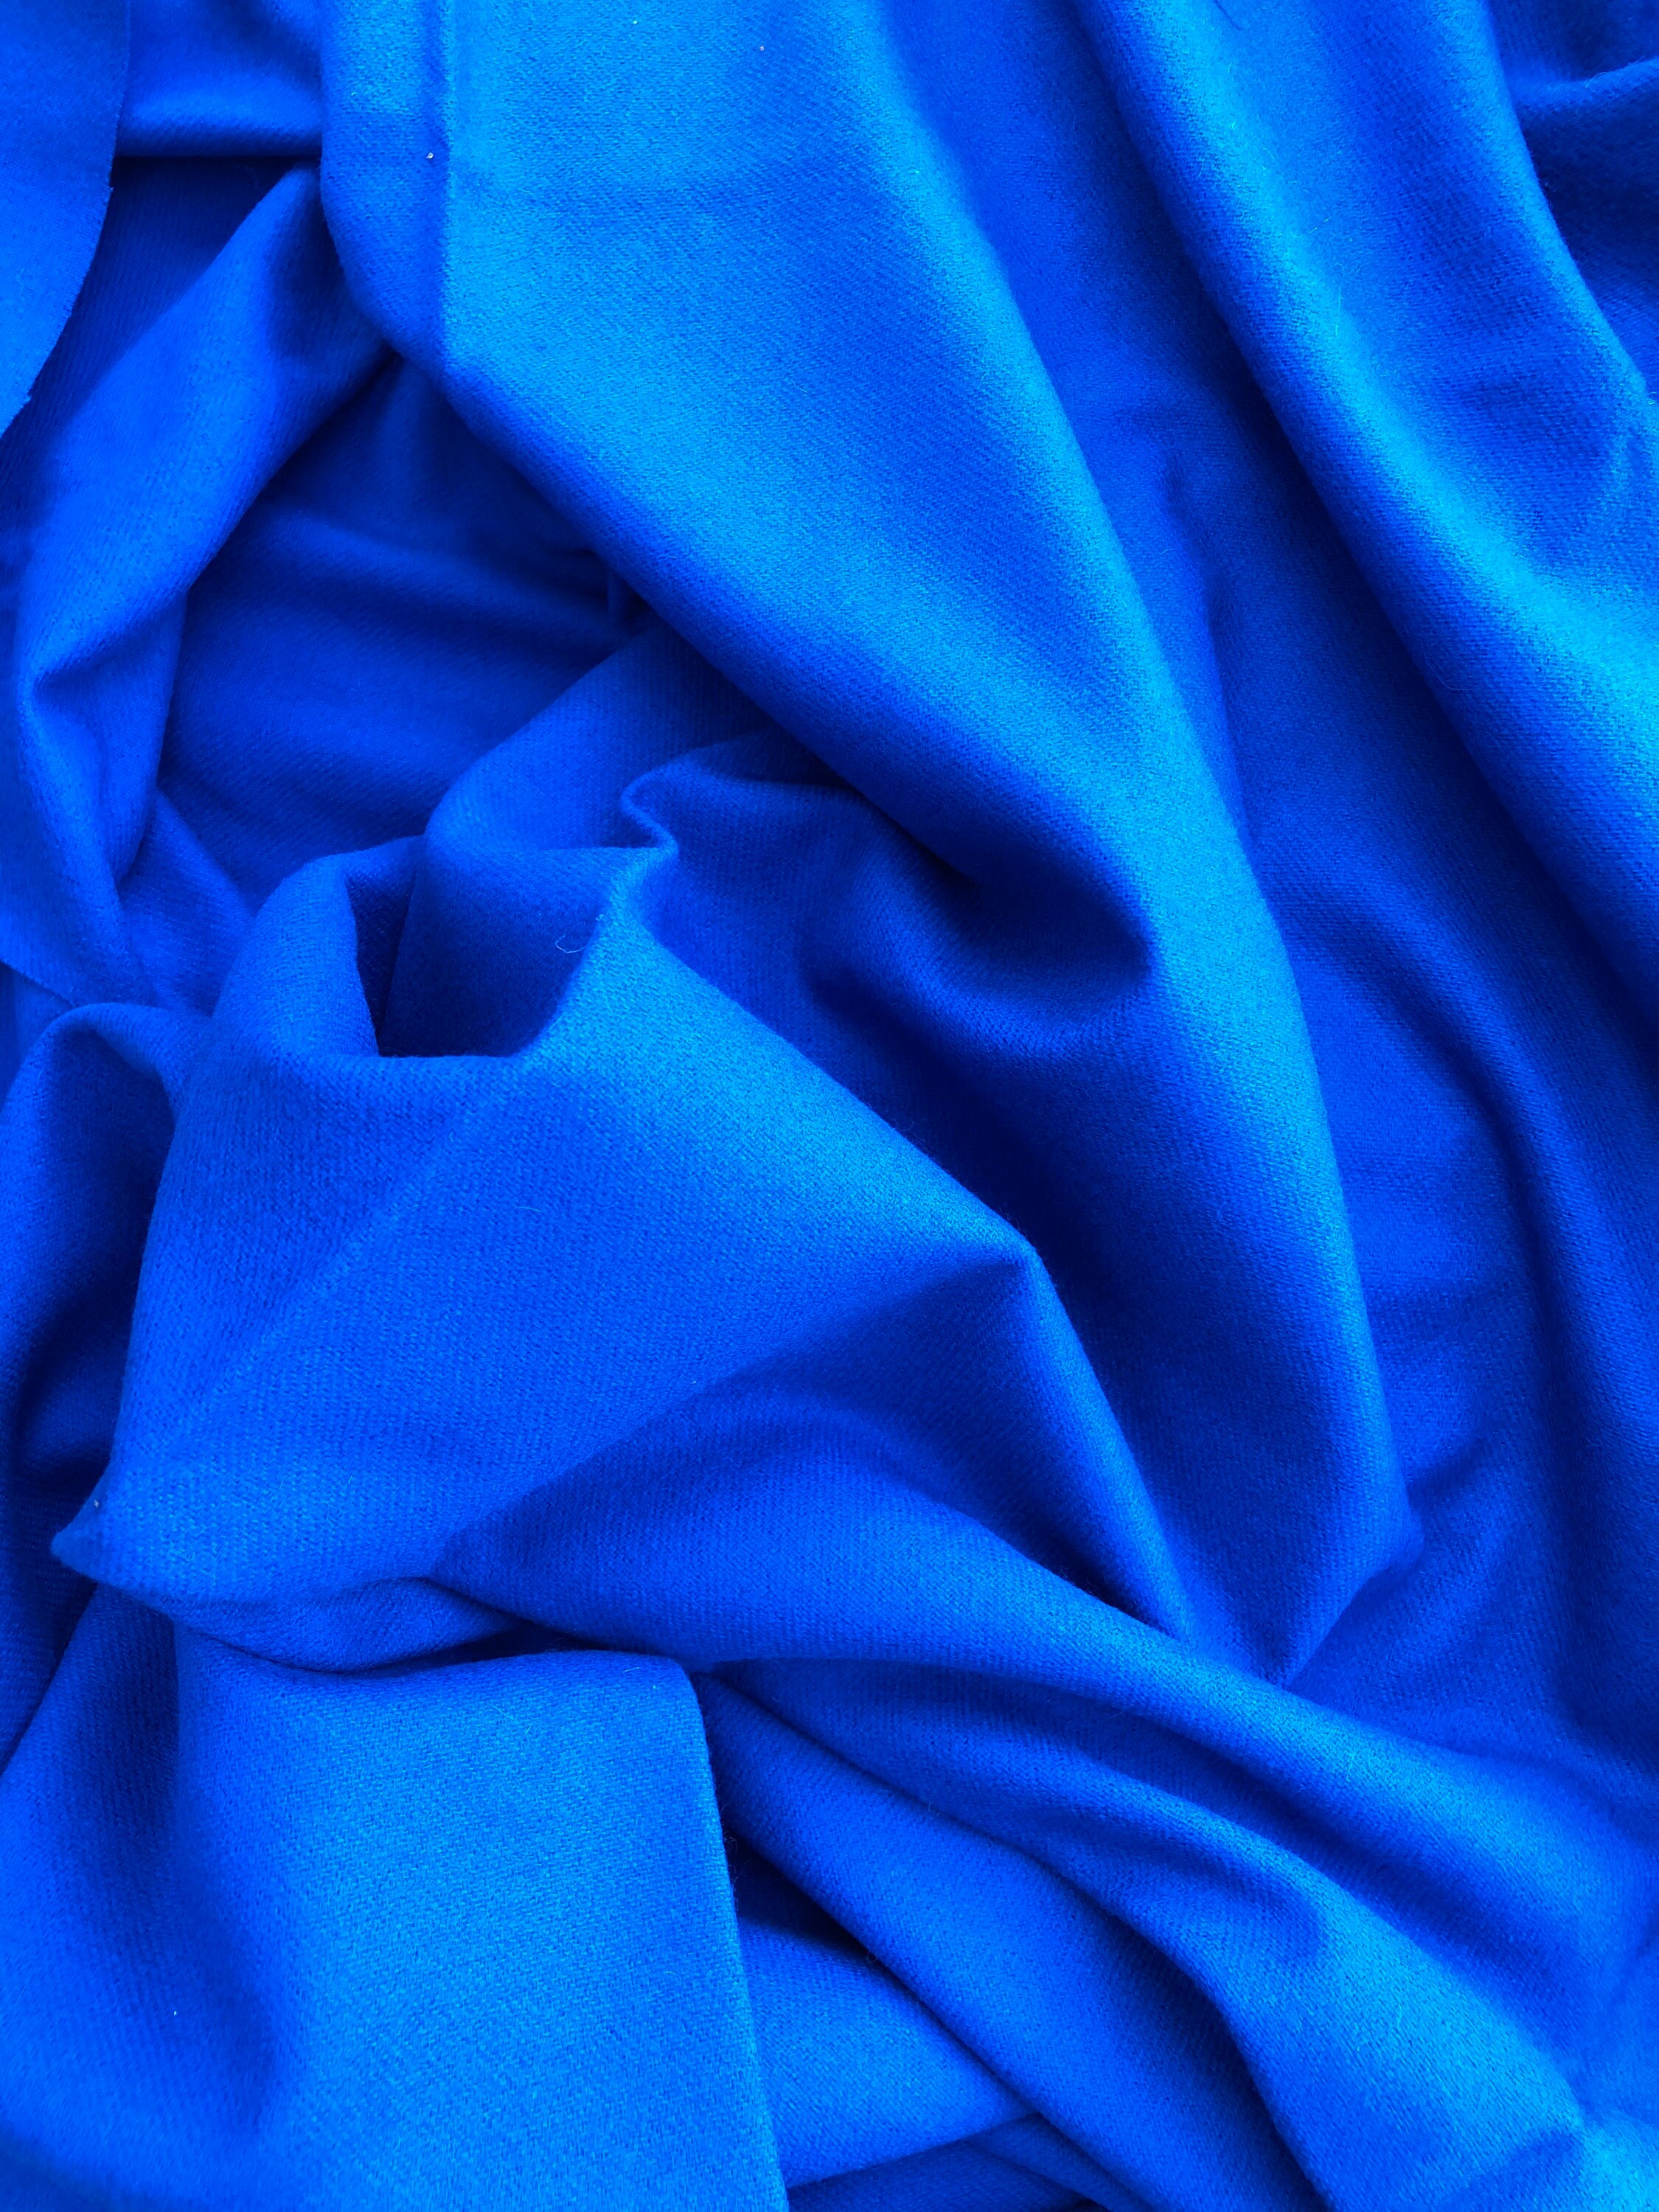 Blue Wool Fabric - Etsy